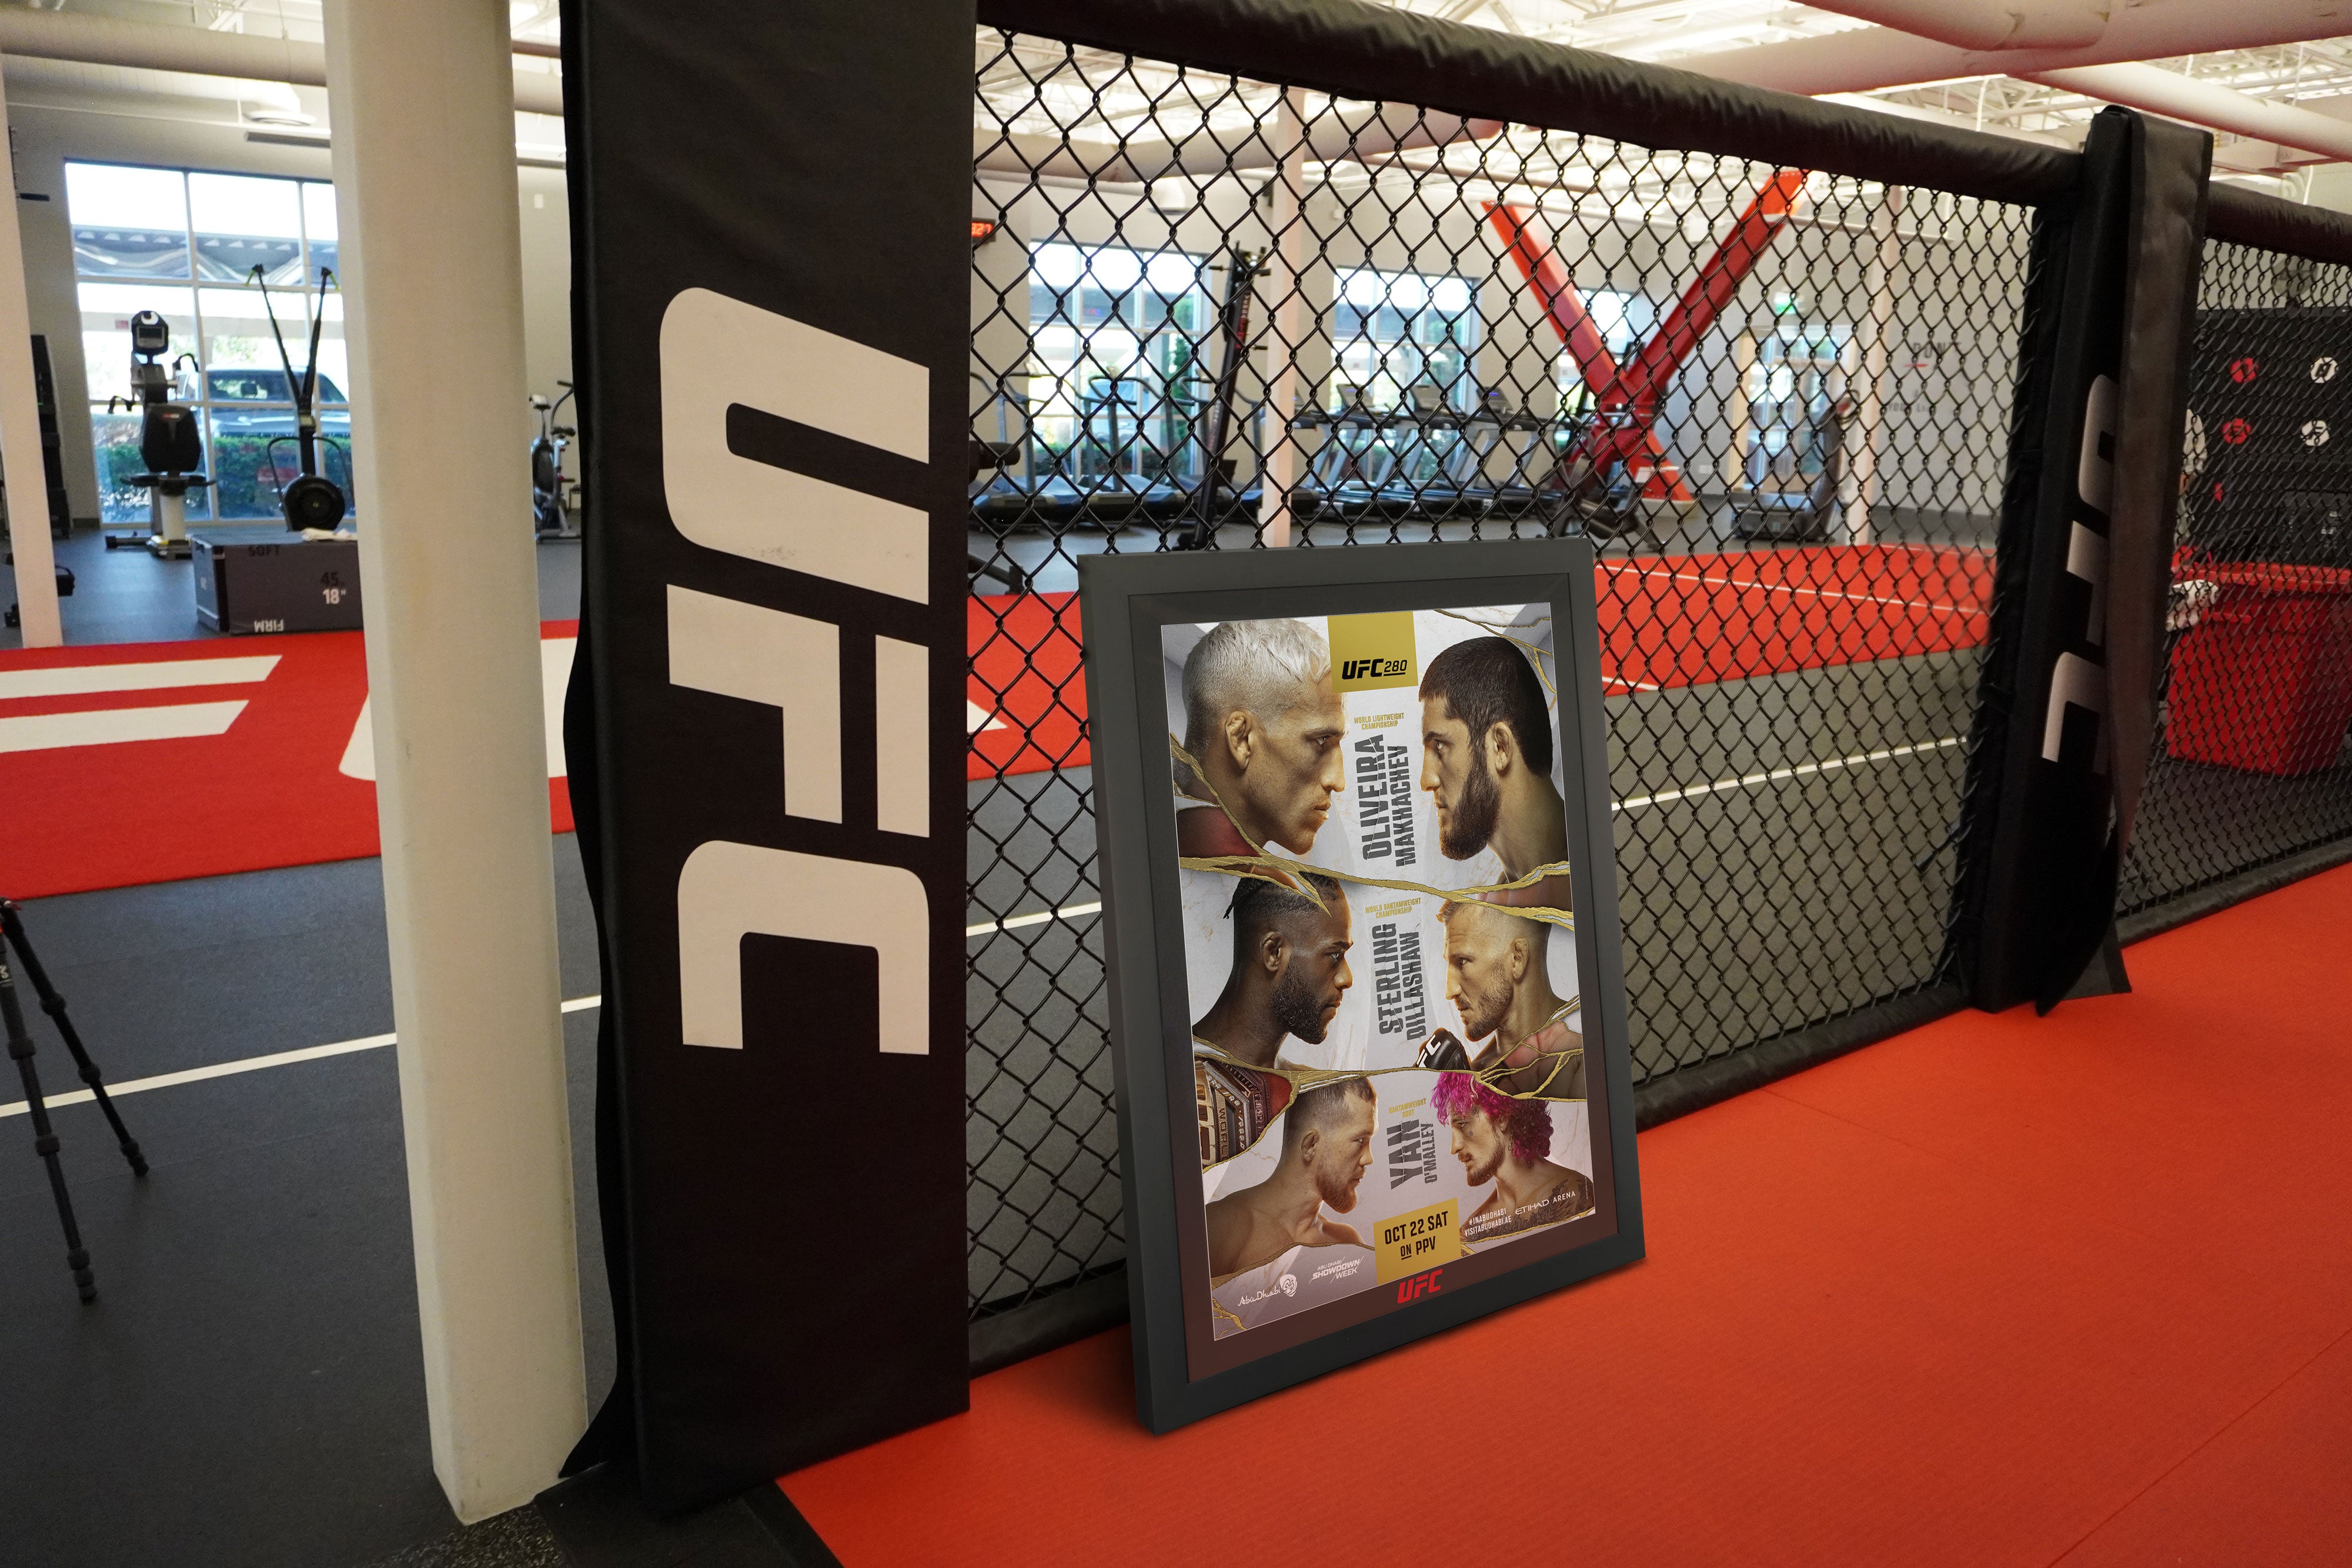 UFC 280: Oliveira vs Makhachev Autographed Poster